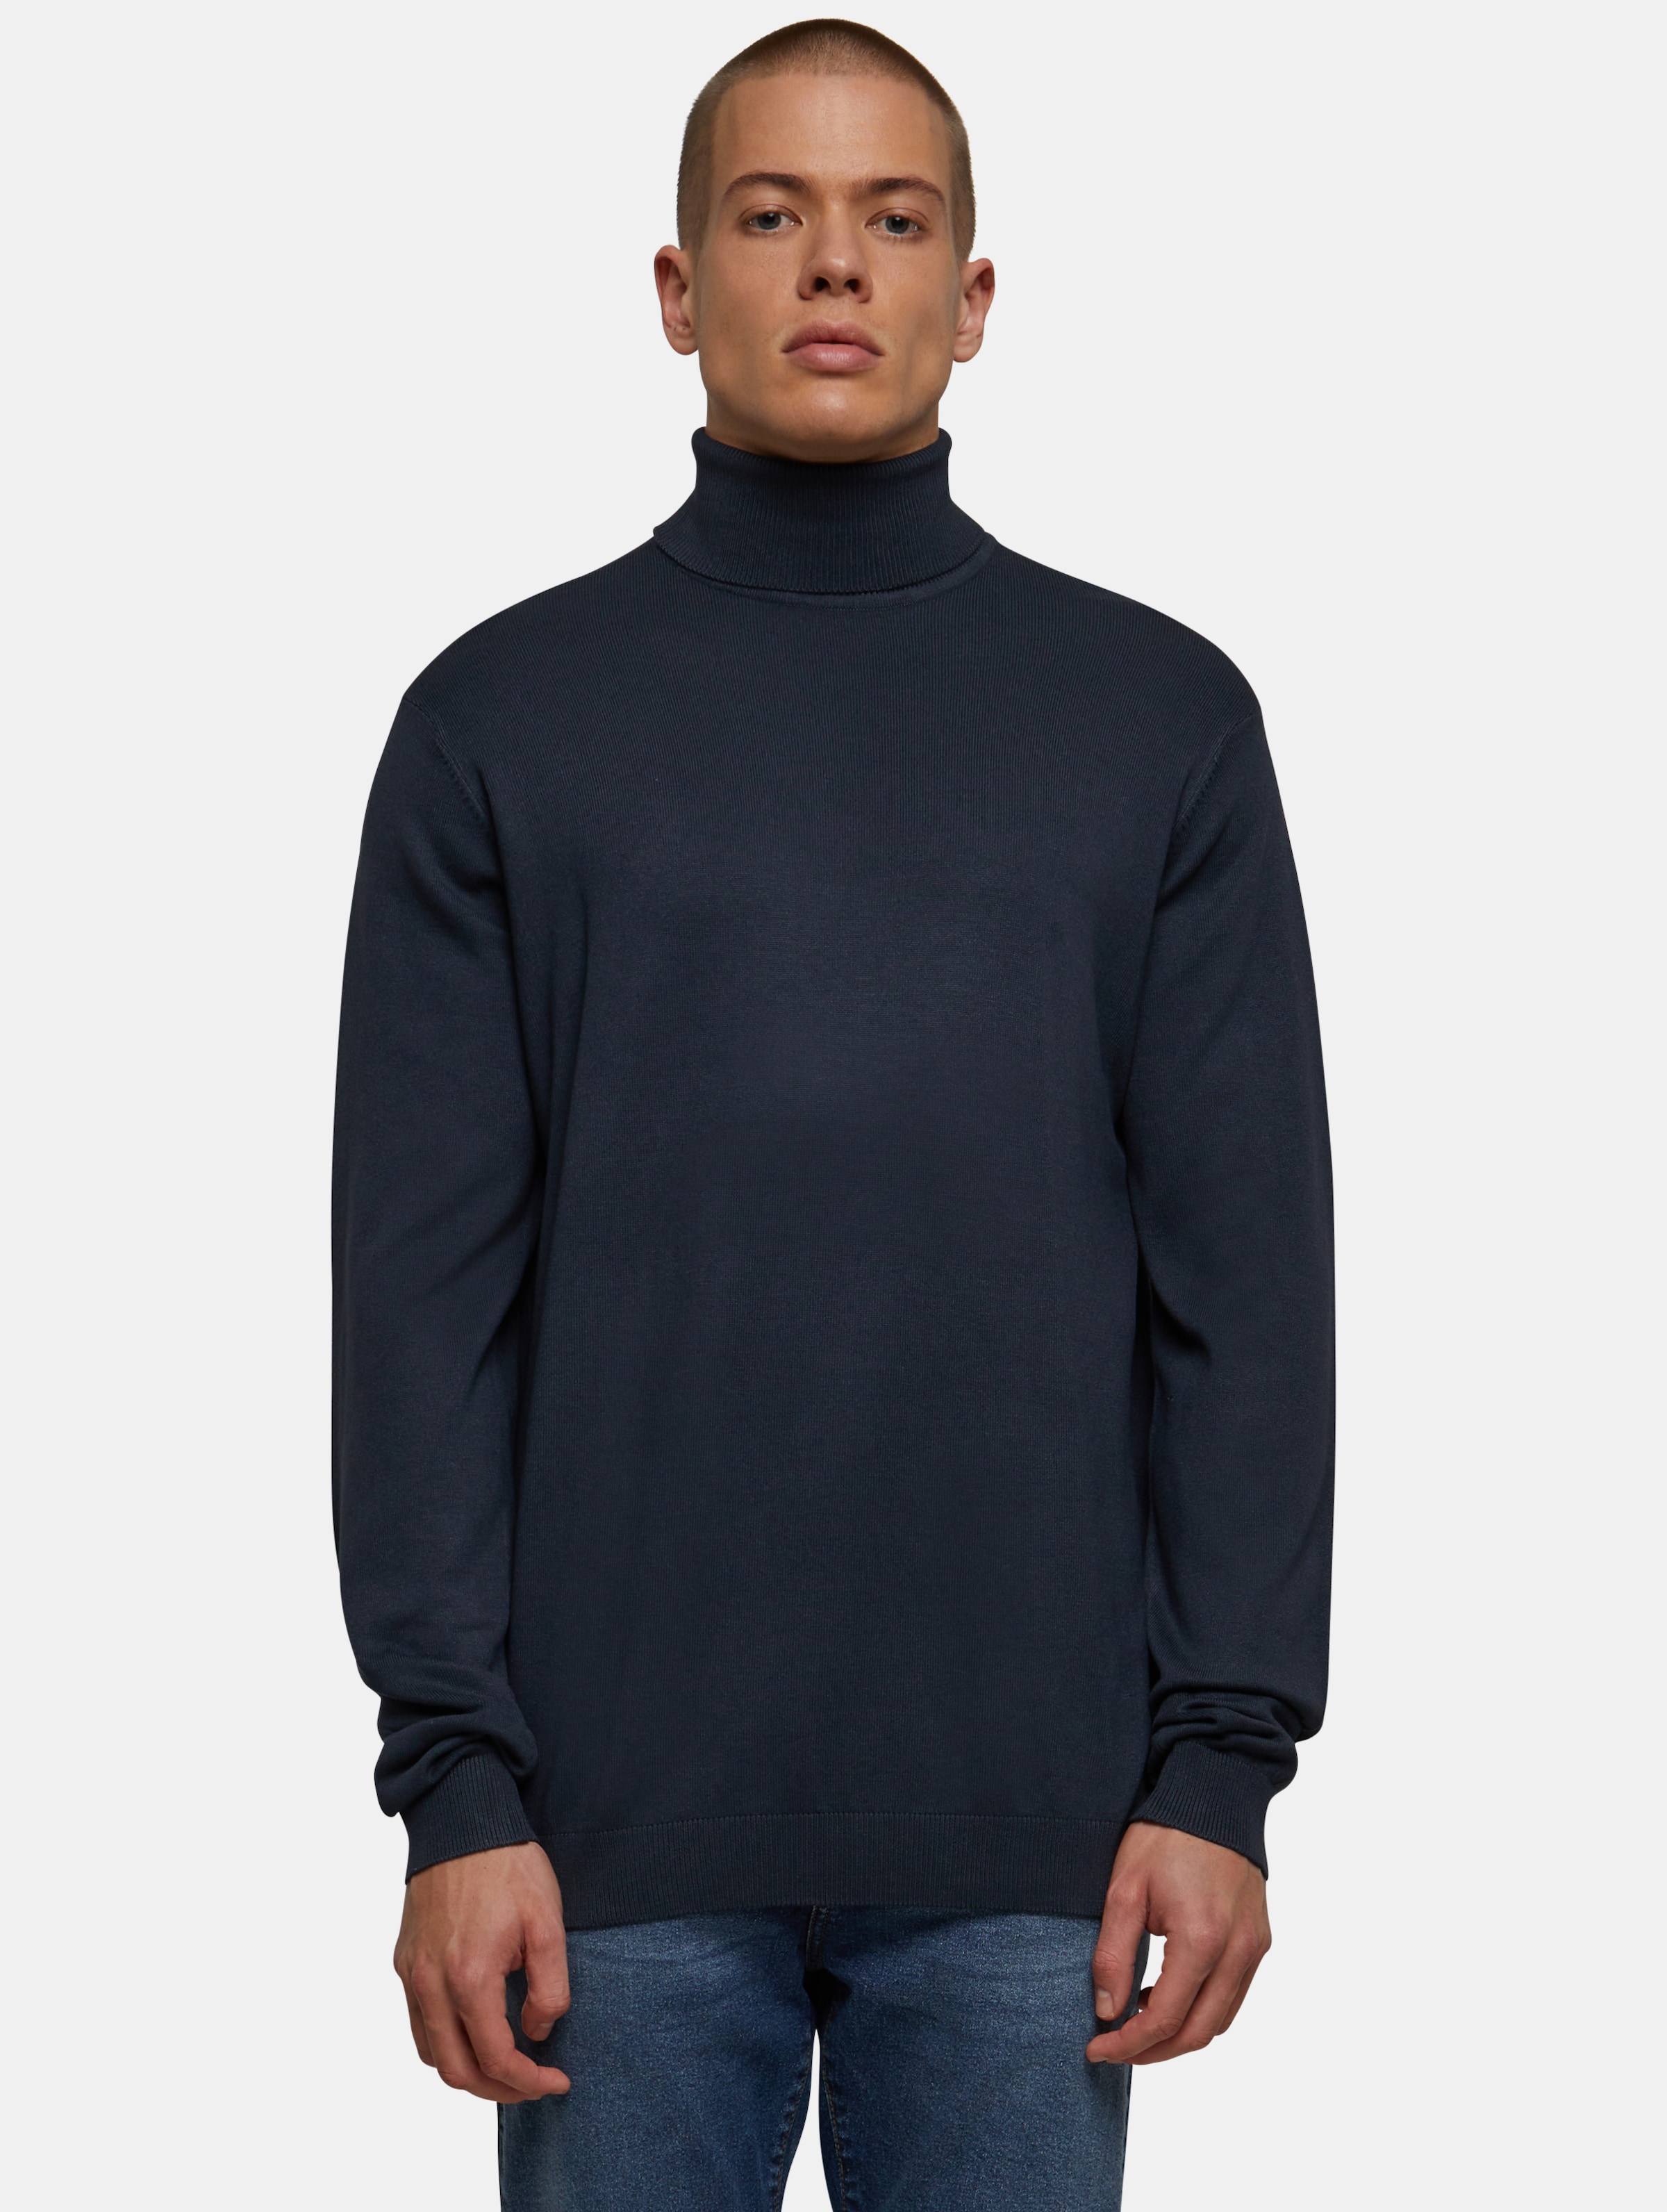 Urban Classics - Knitted Turtleneck Sweater - 3XL - Donkerblauw